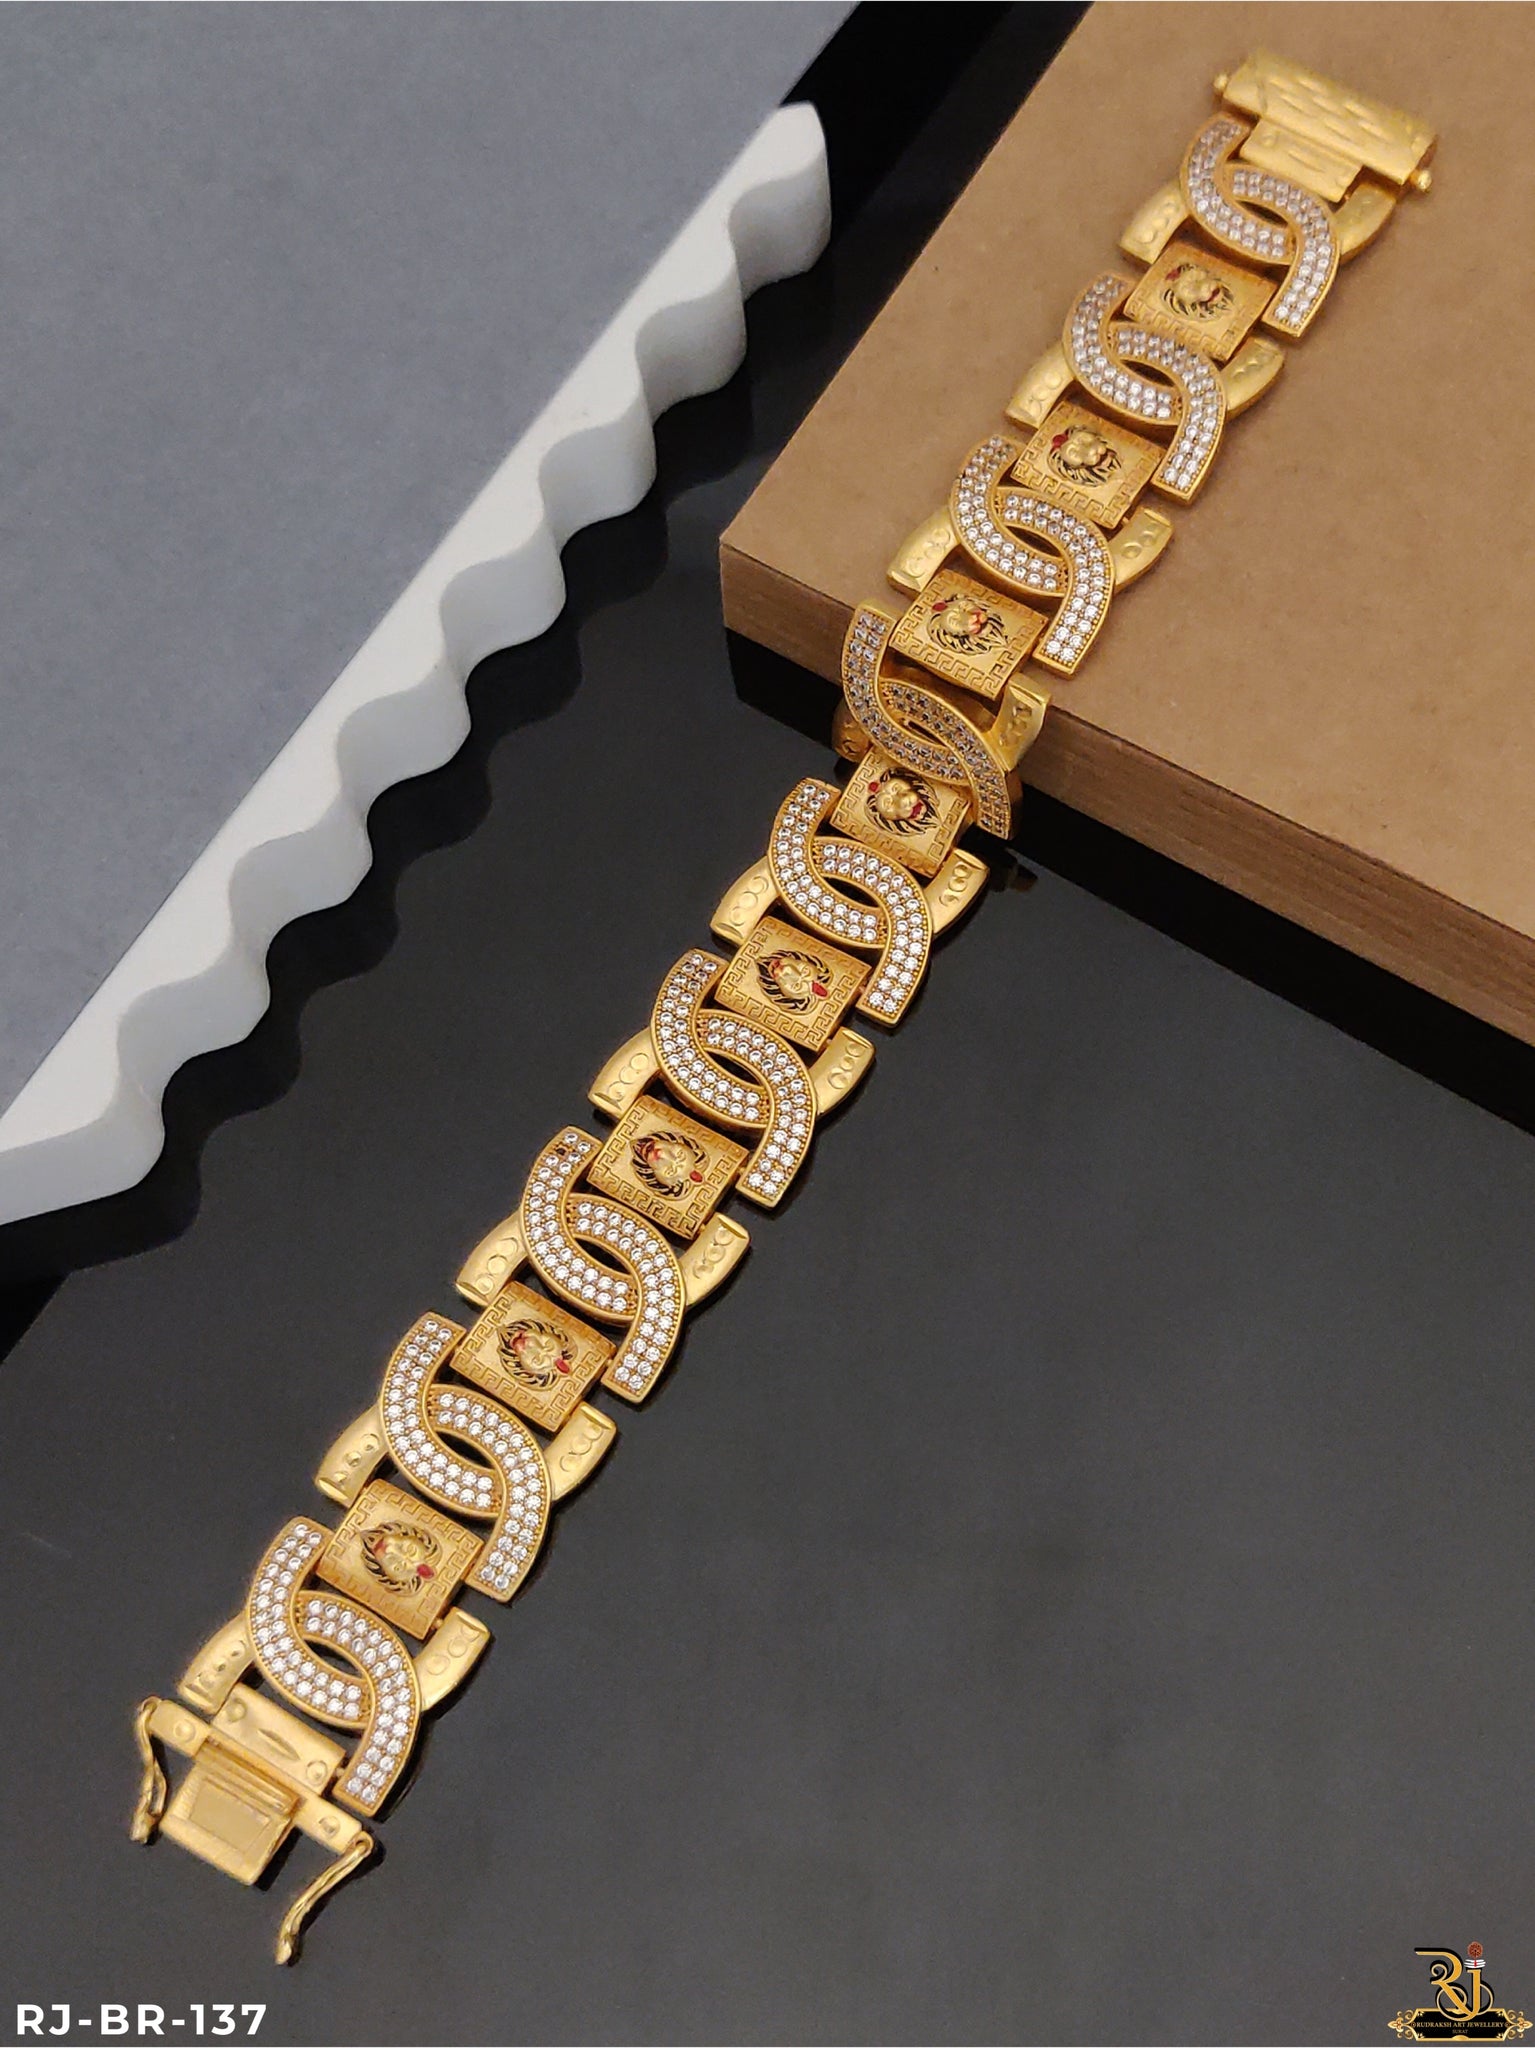 Freemen Elegant Stylish Design Gold Bracelet - Fmg286 at Rs 2900.00 | सोने  के कंगन - Freemen, Ahmedabad | ID: 2851056423391